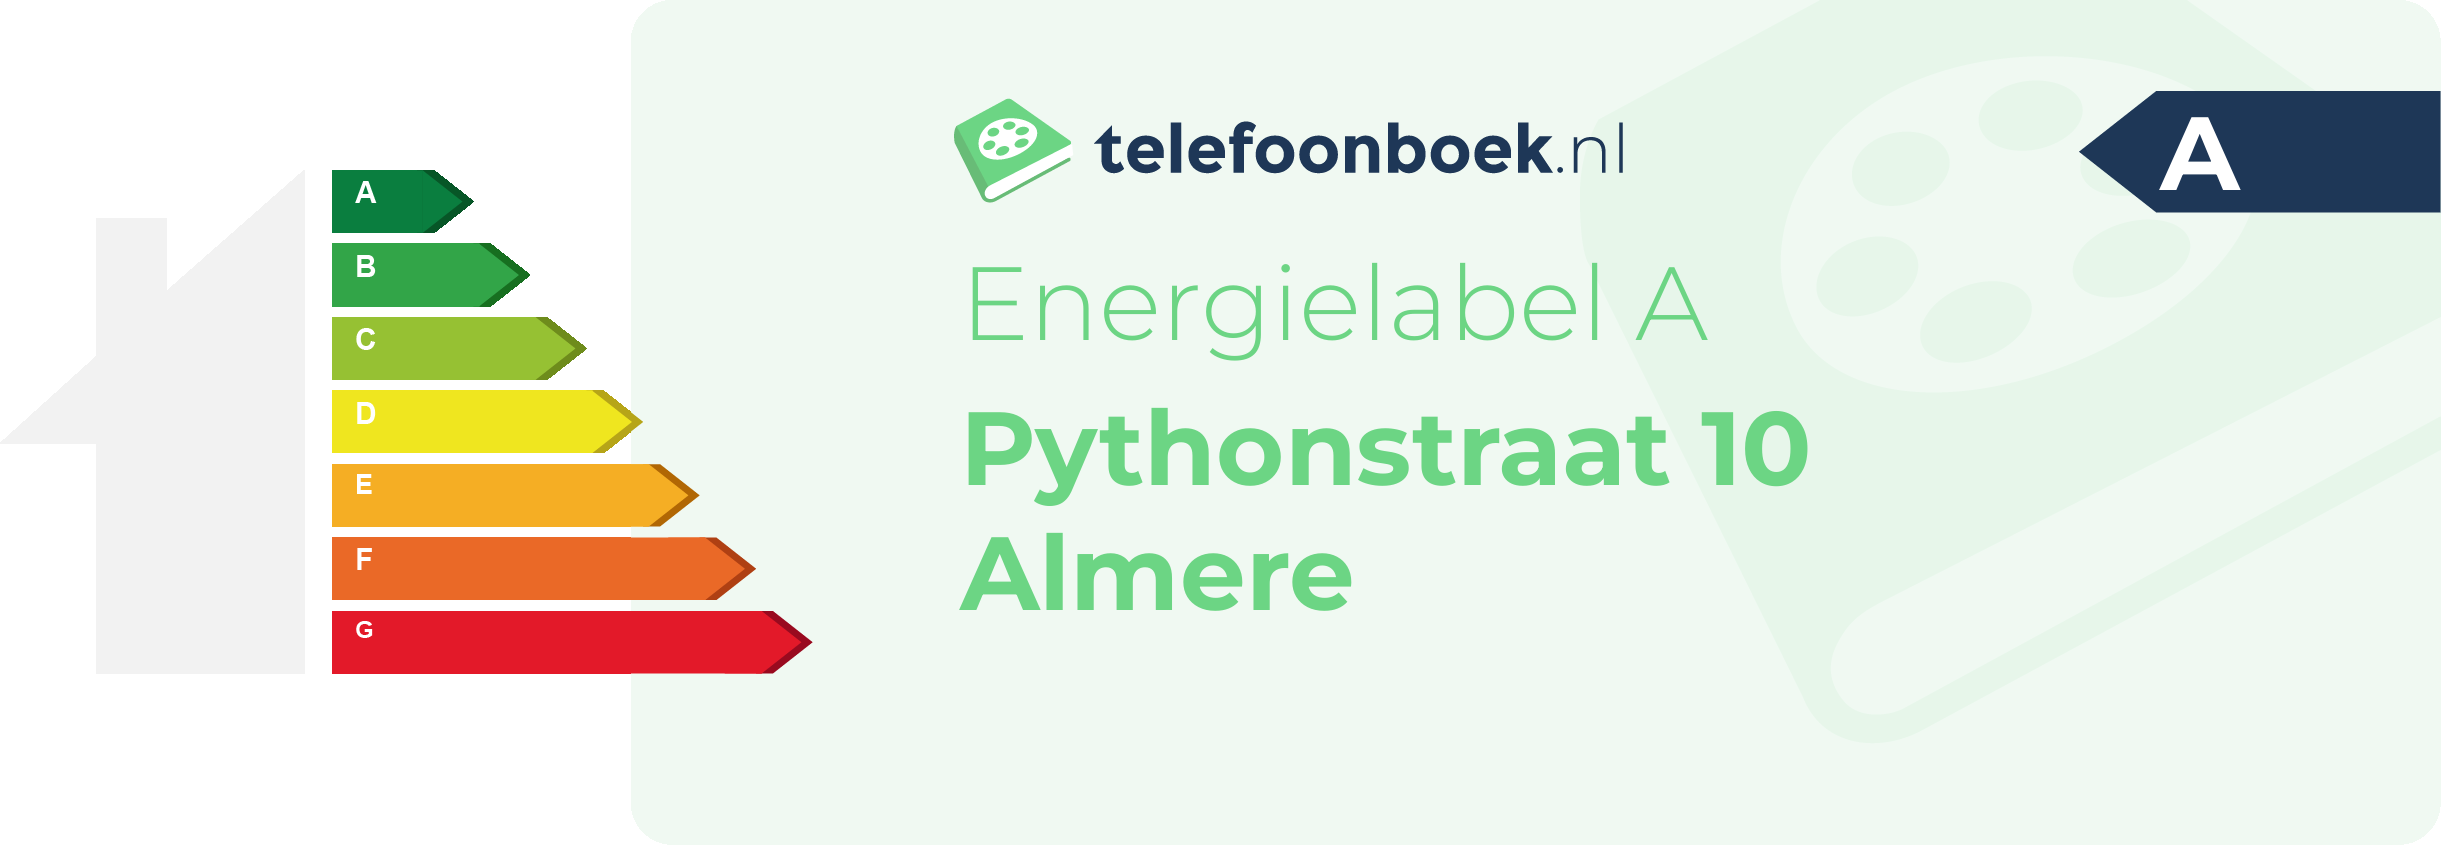 Energielabel Pythonstraat 10 Almere